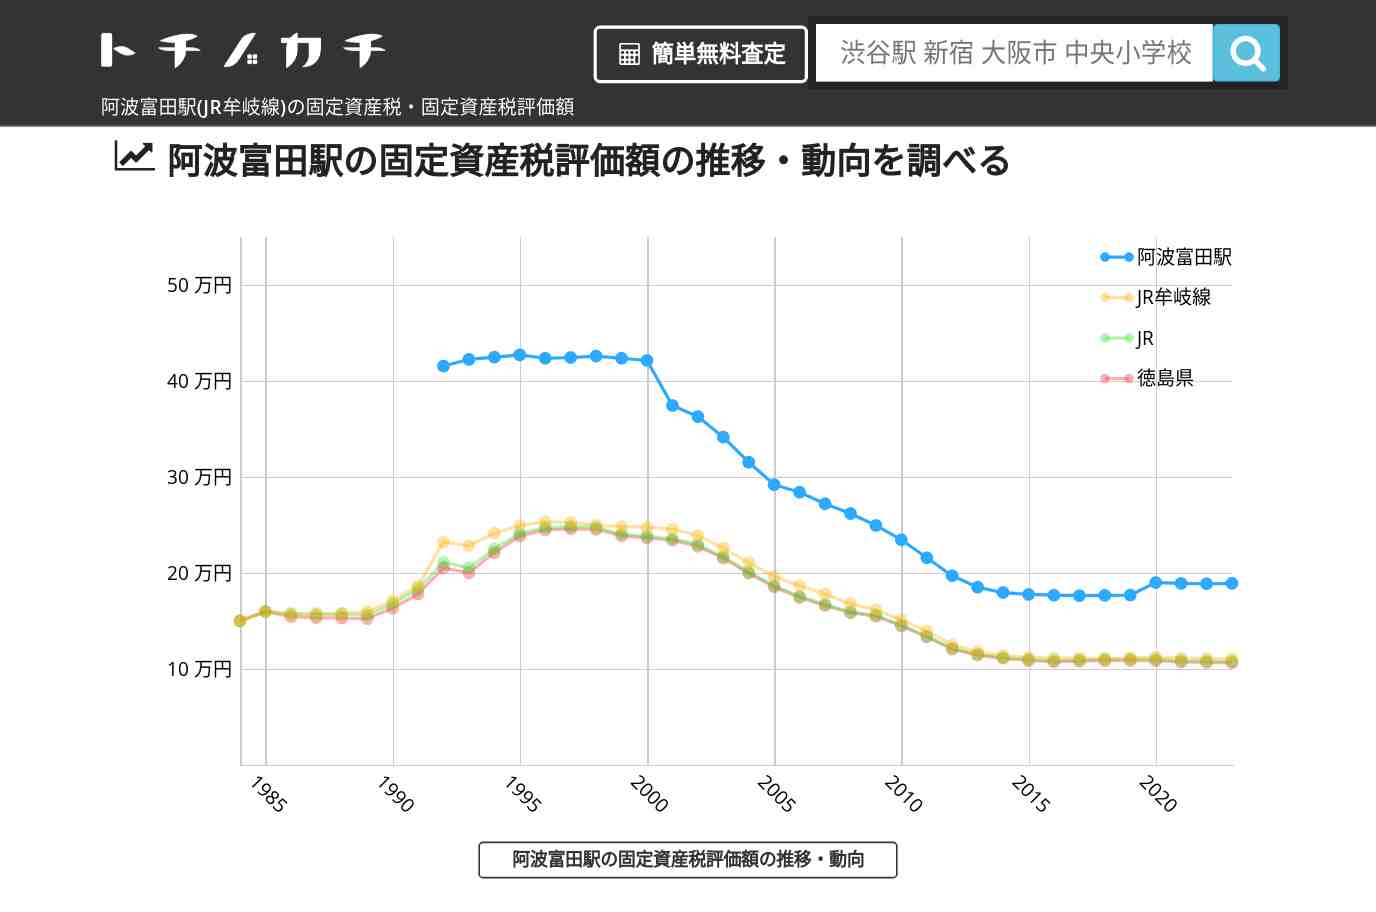 阿波富田駅(JR牟岐線)の固定資産税・固定資産税評価額 | トチノカチ